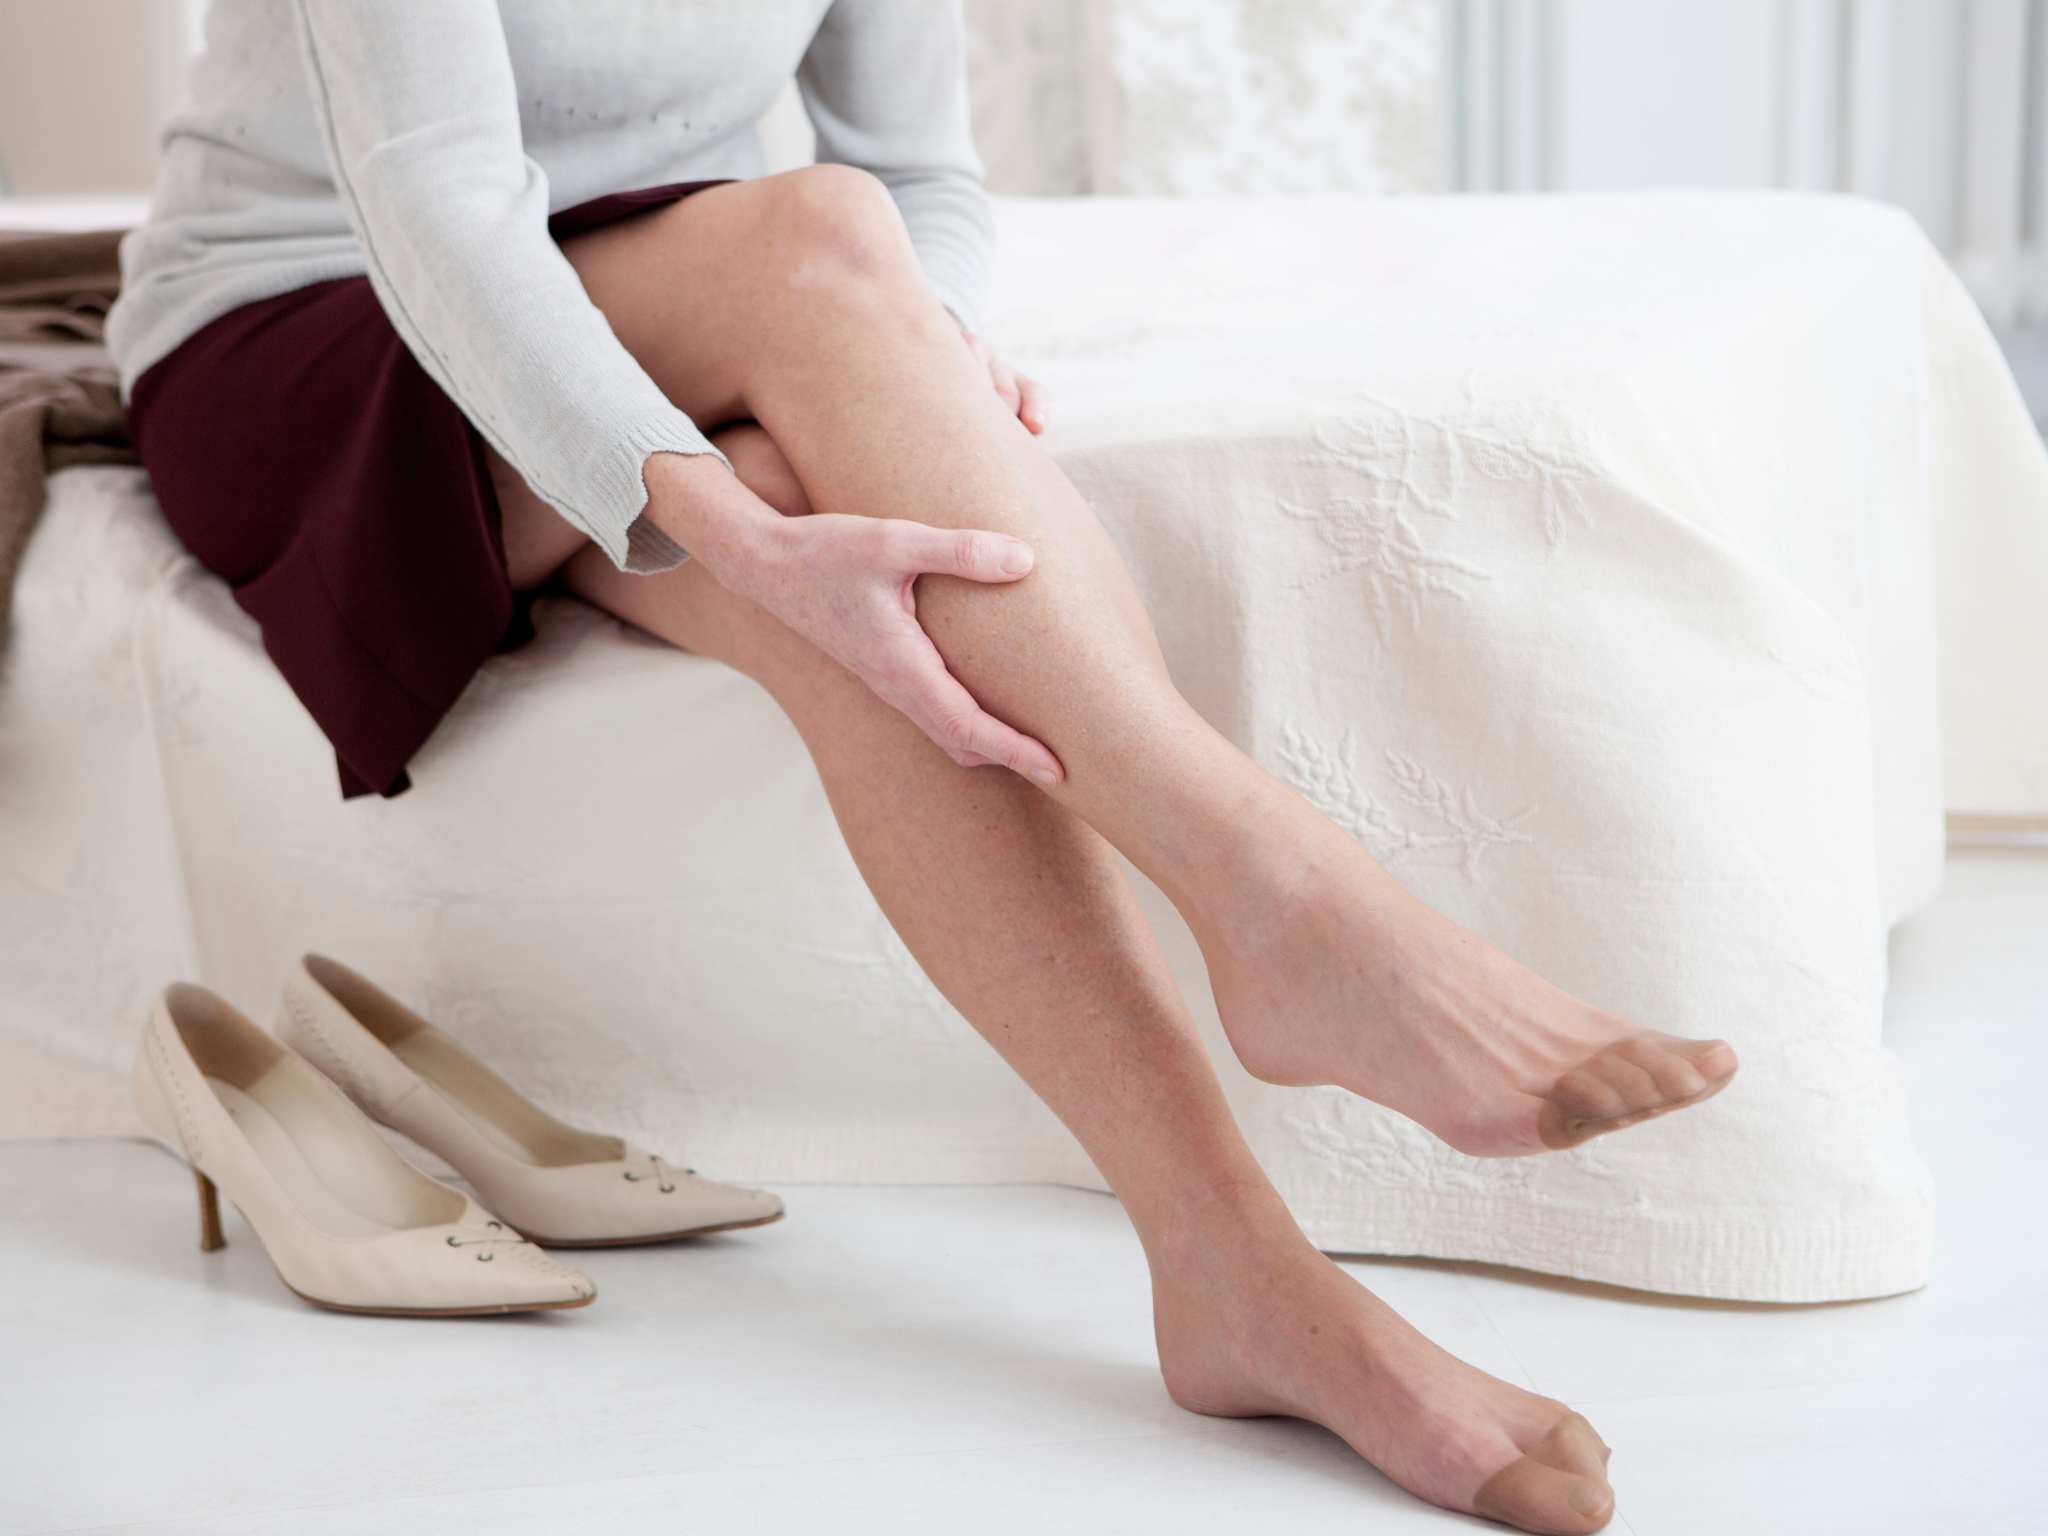 Senior woman suffering from leg pain